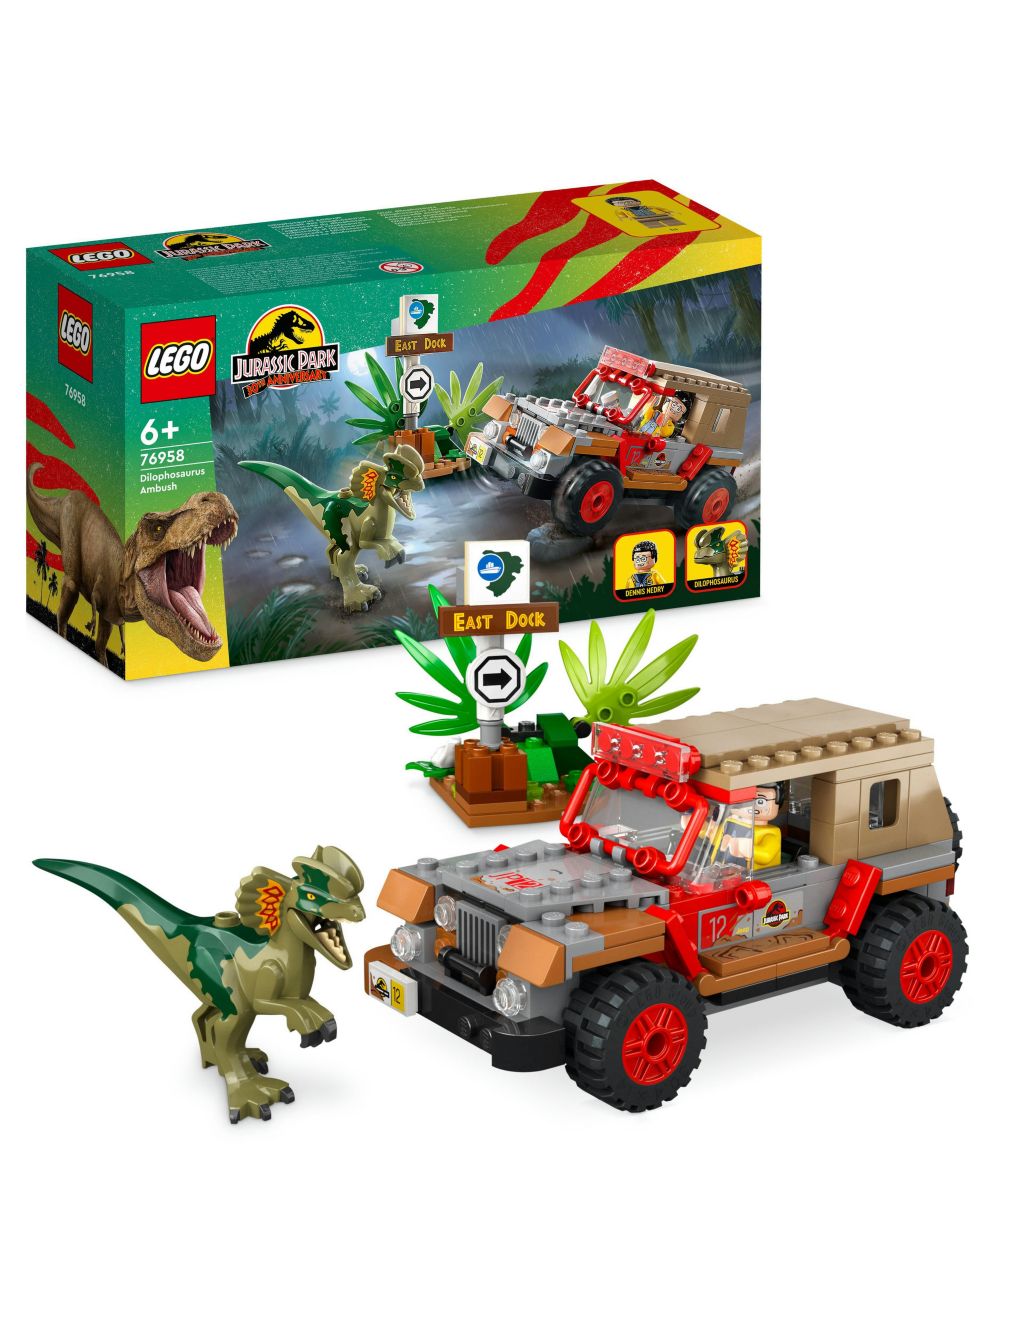 LEGO Jurassic Park Dilophosaurus Ambush Set (6+ Yrs) image 1